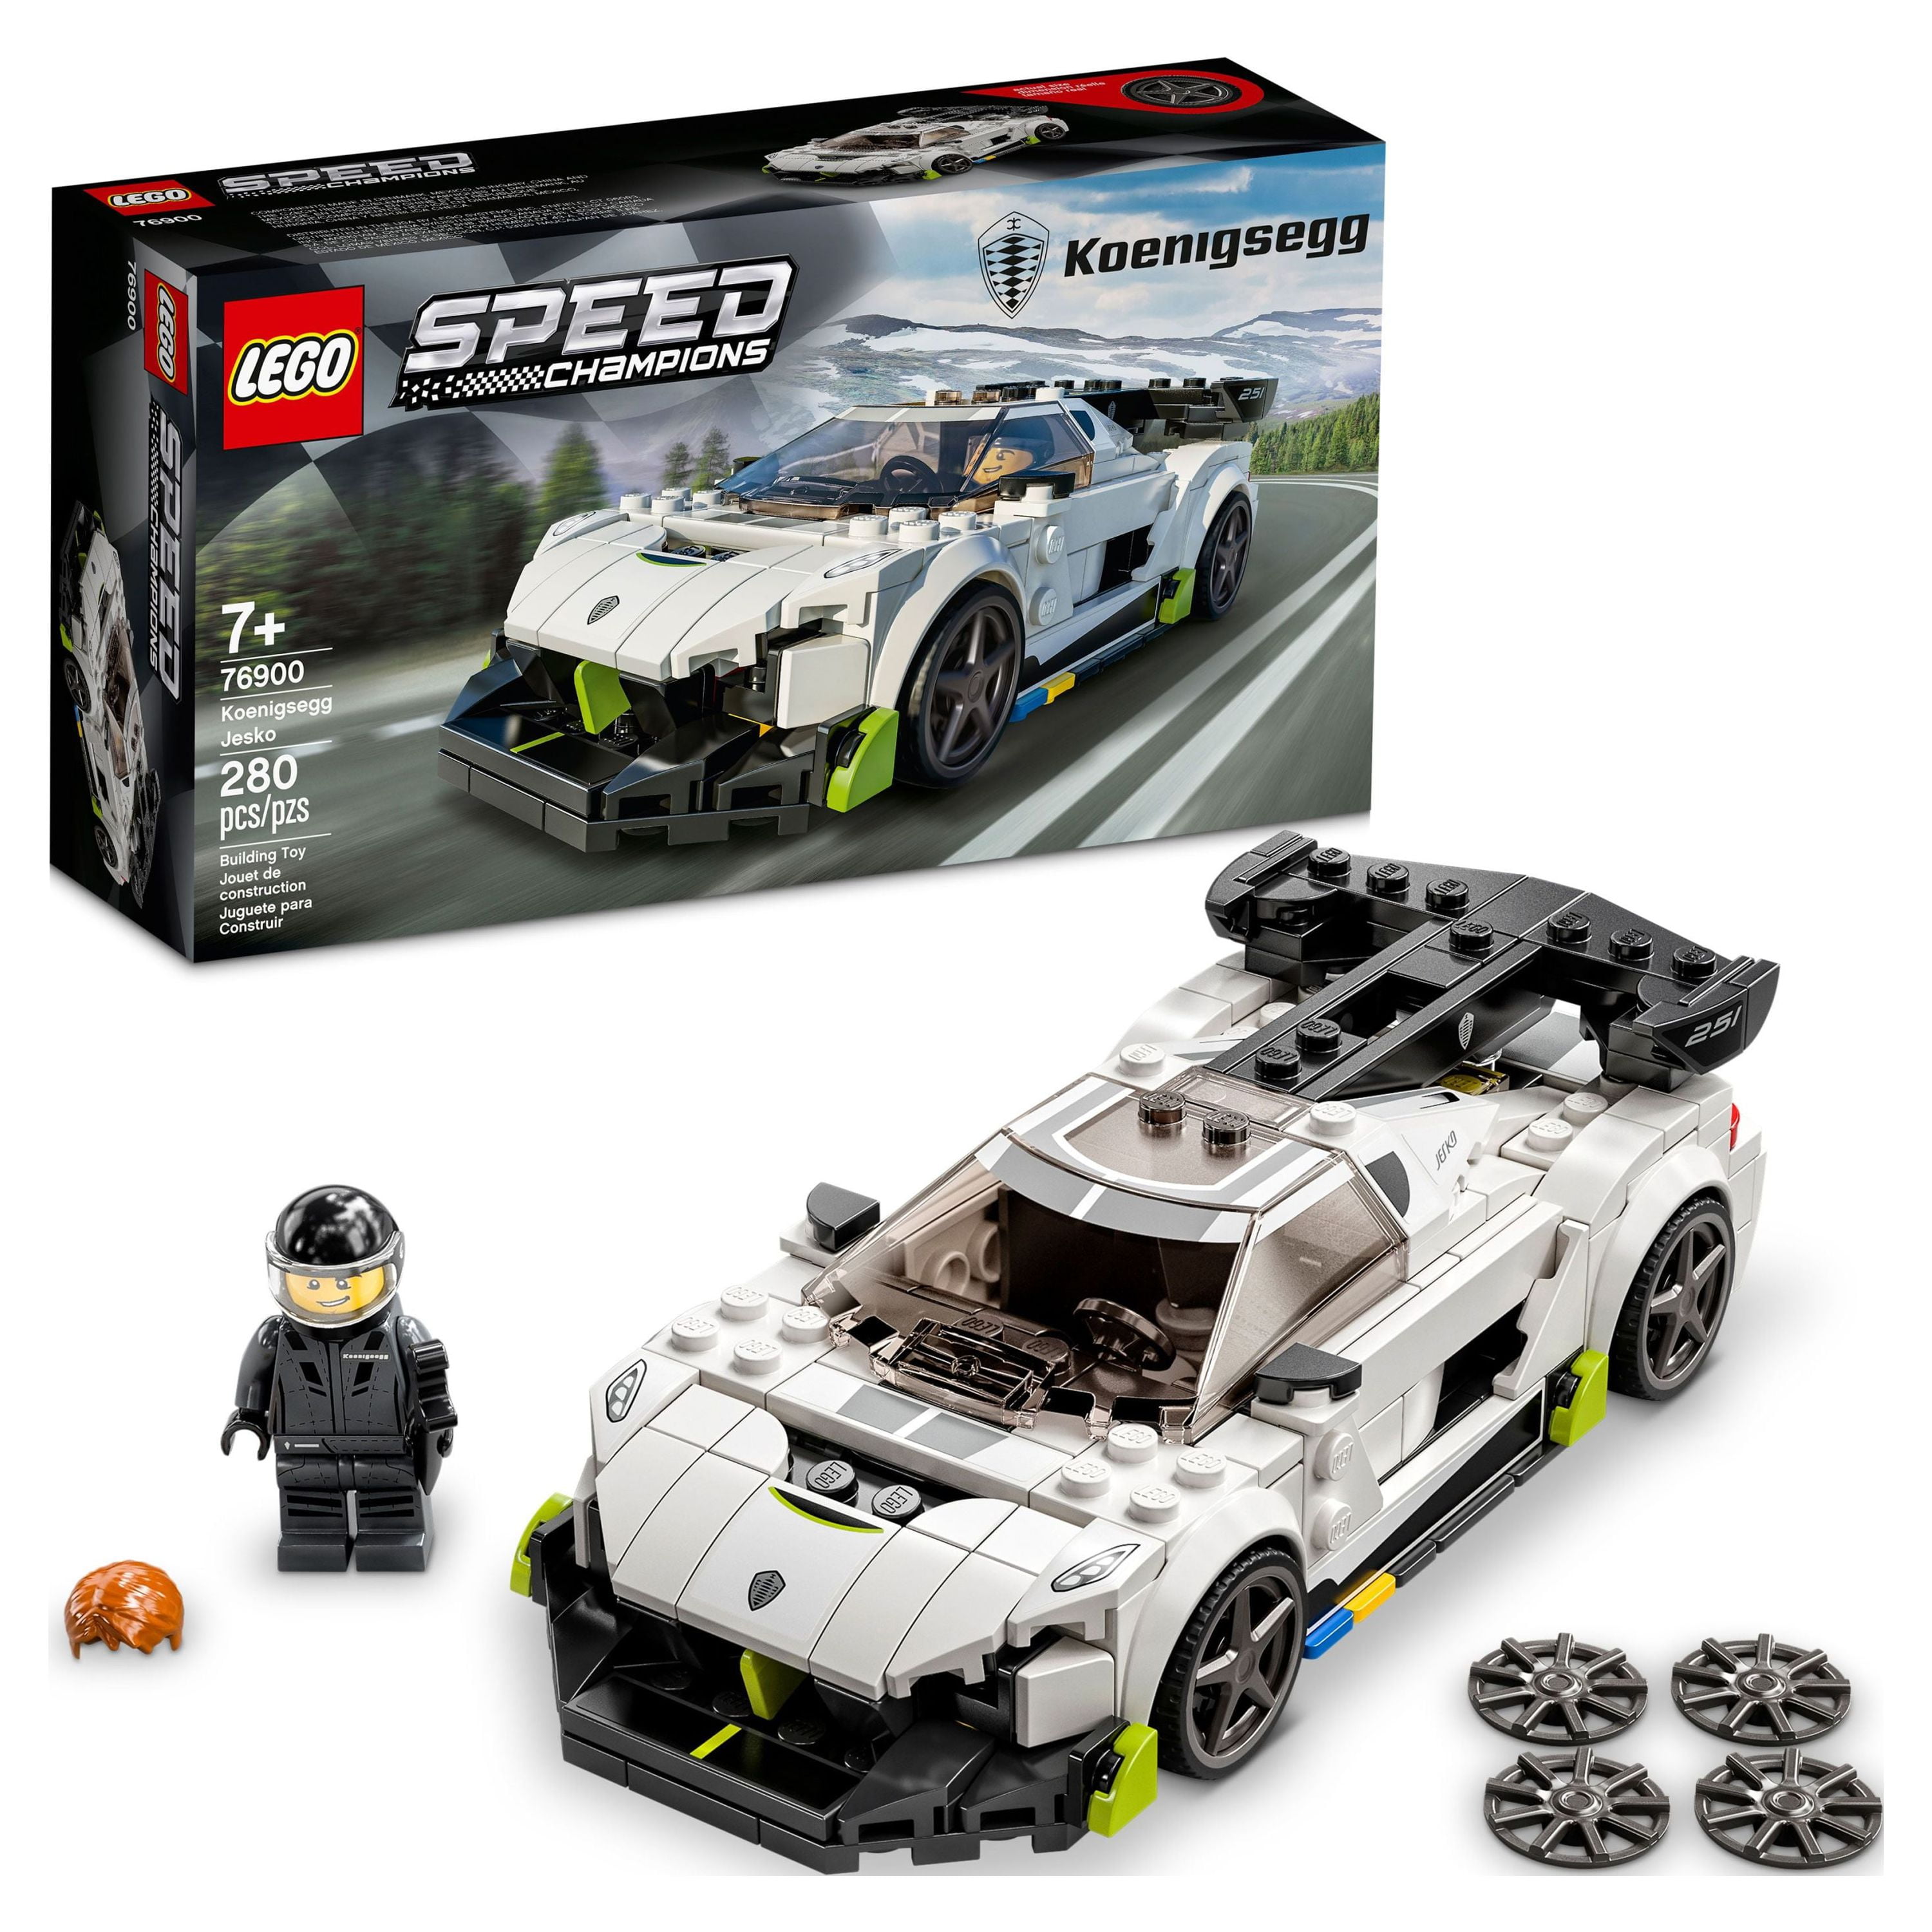 280-Piece LEGO Speed Champions Koenigsegg Jesko Racing Car Building Toy Set (White, 76900) $20 + Free S&H w/ Walmart+ or $35+